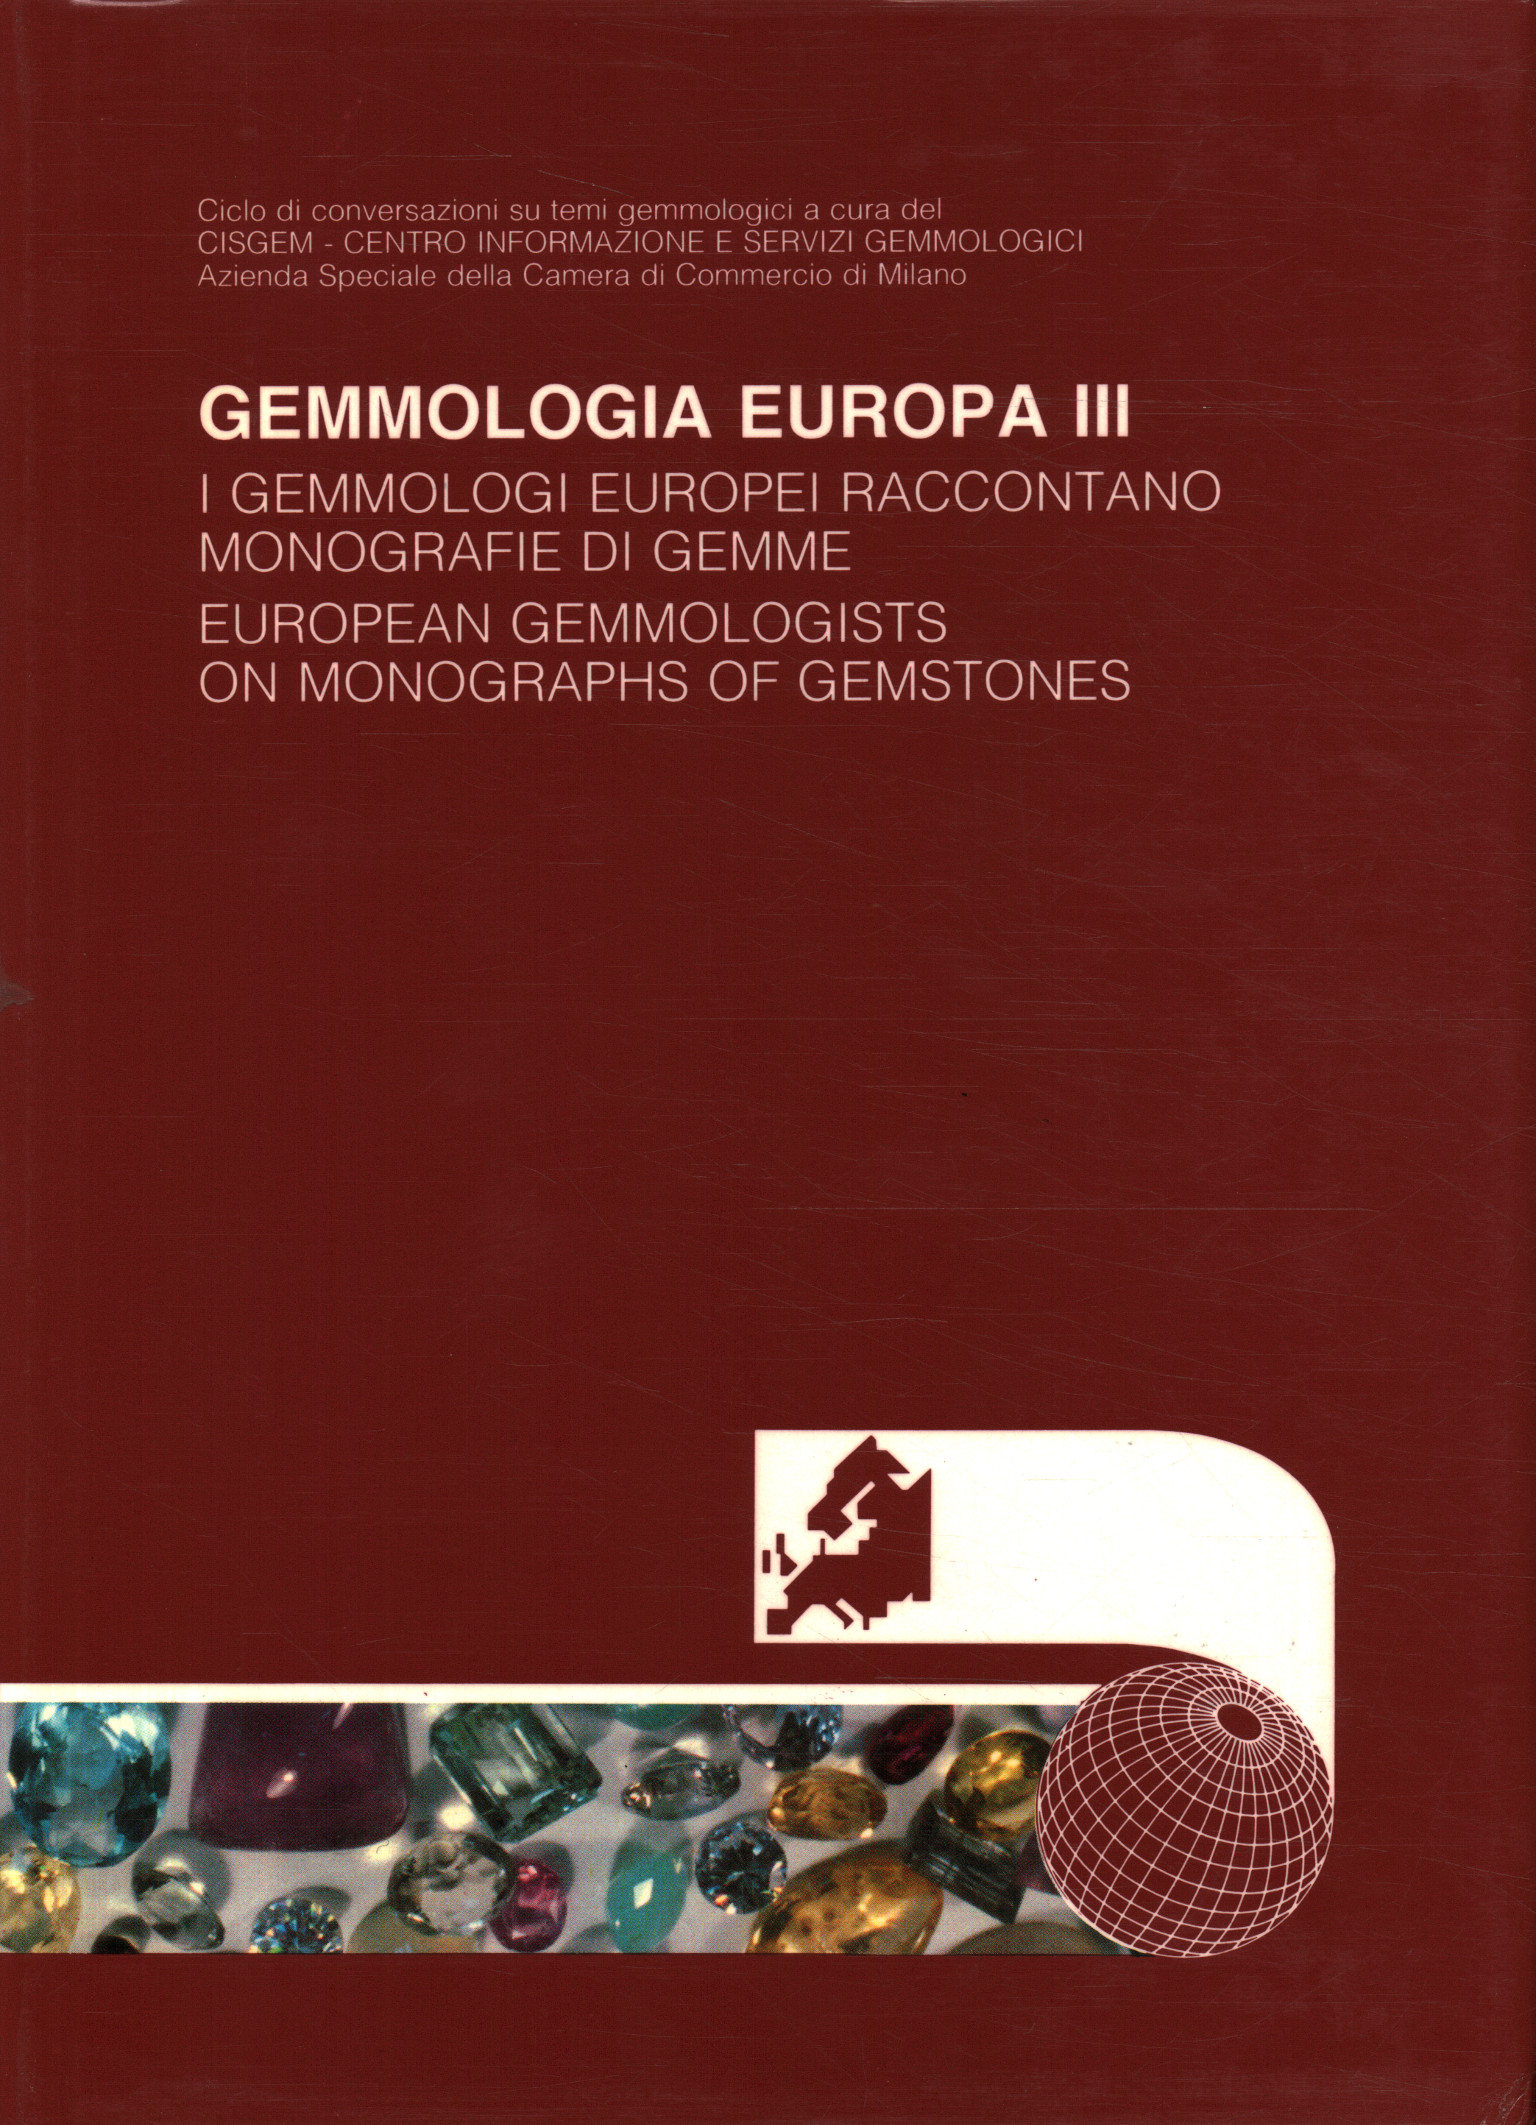 Gemmology Europe III